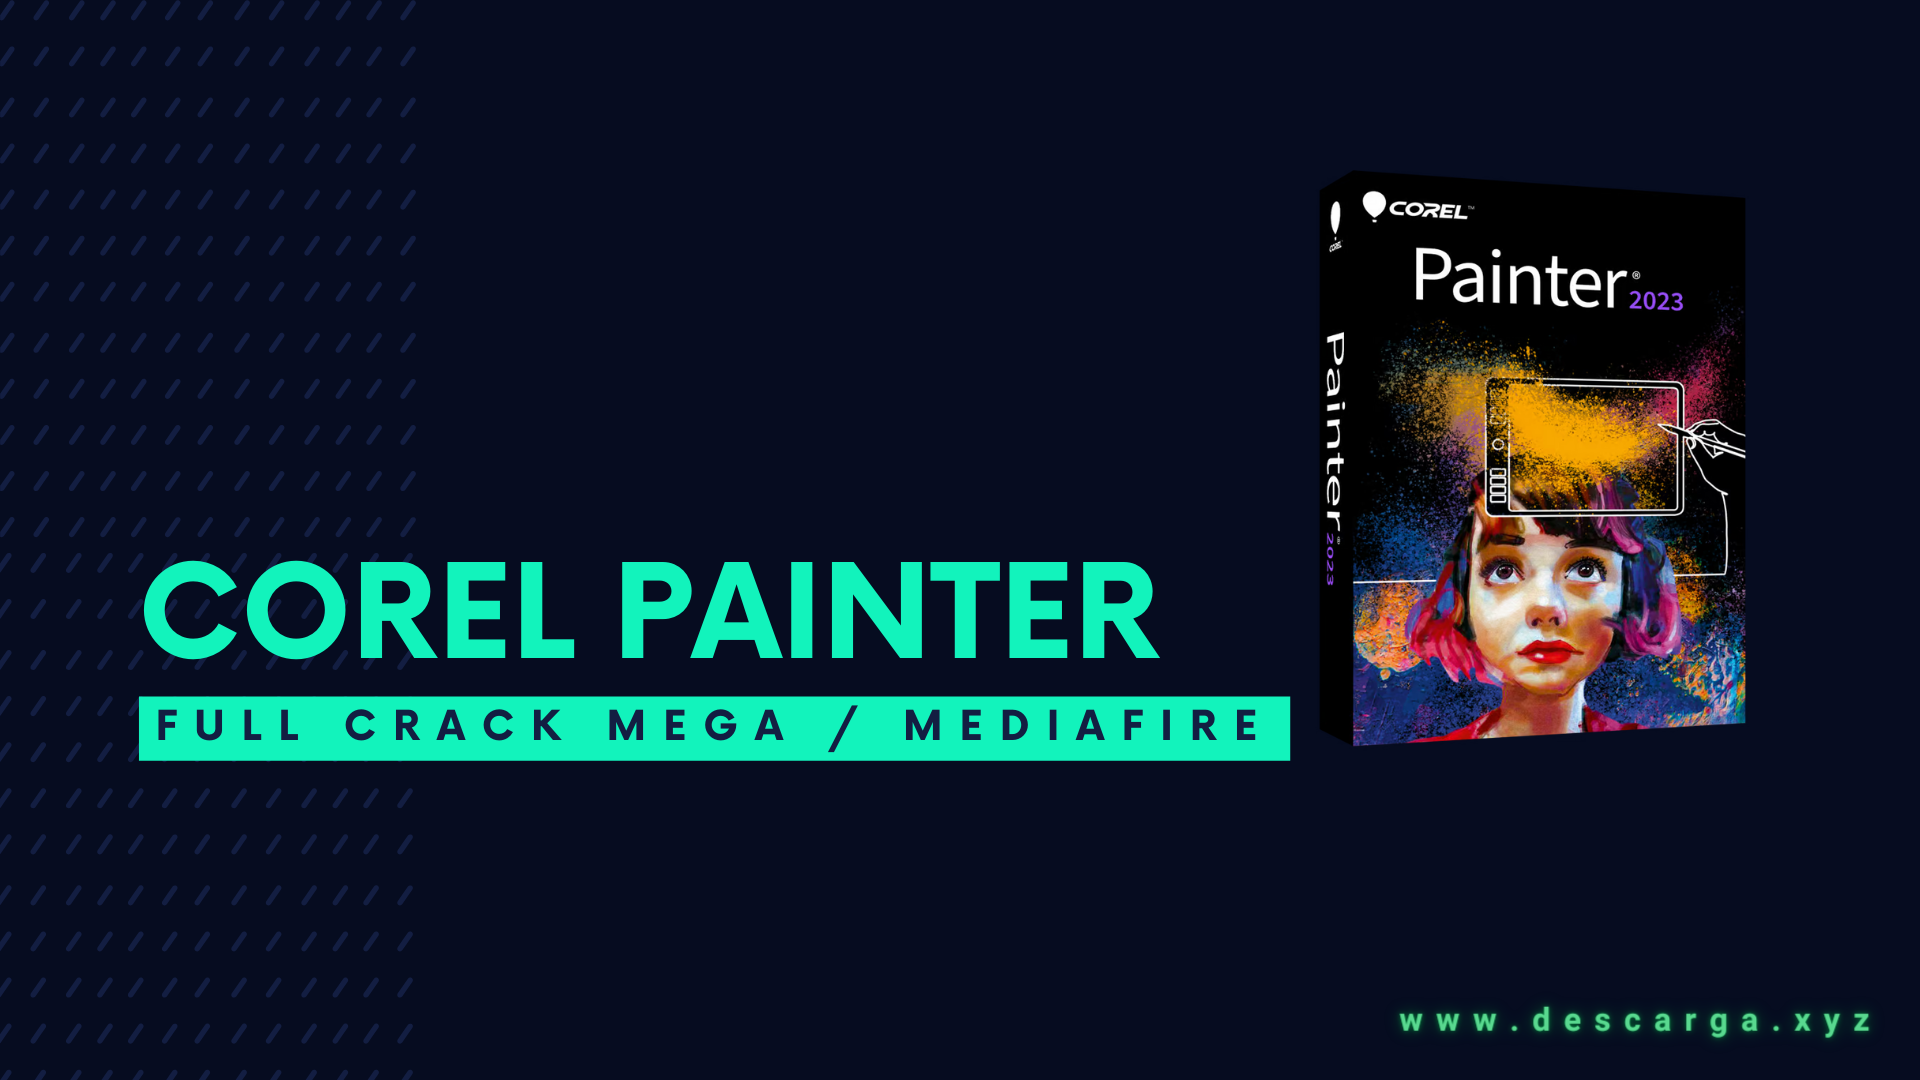 Download 🥇 Corel Painter 2023 FULL! v23.0.0.244 ✅ [GRATIS] » MEGA